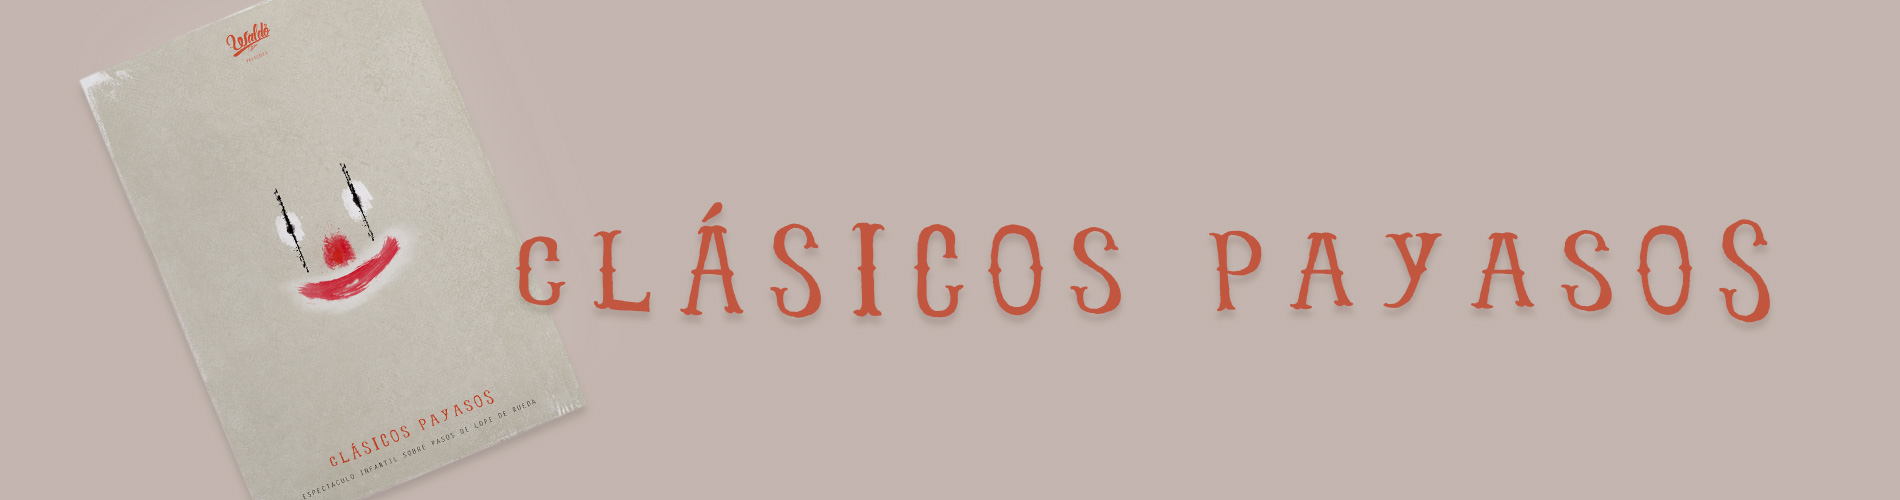 Banner_Clasicos_payasos